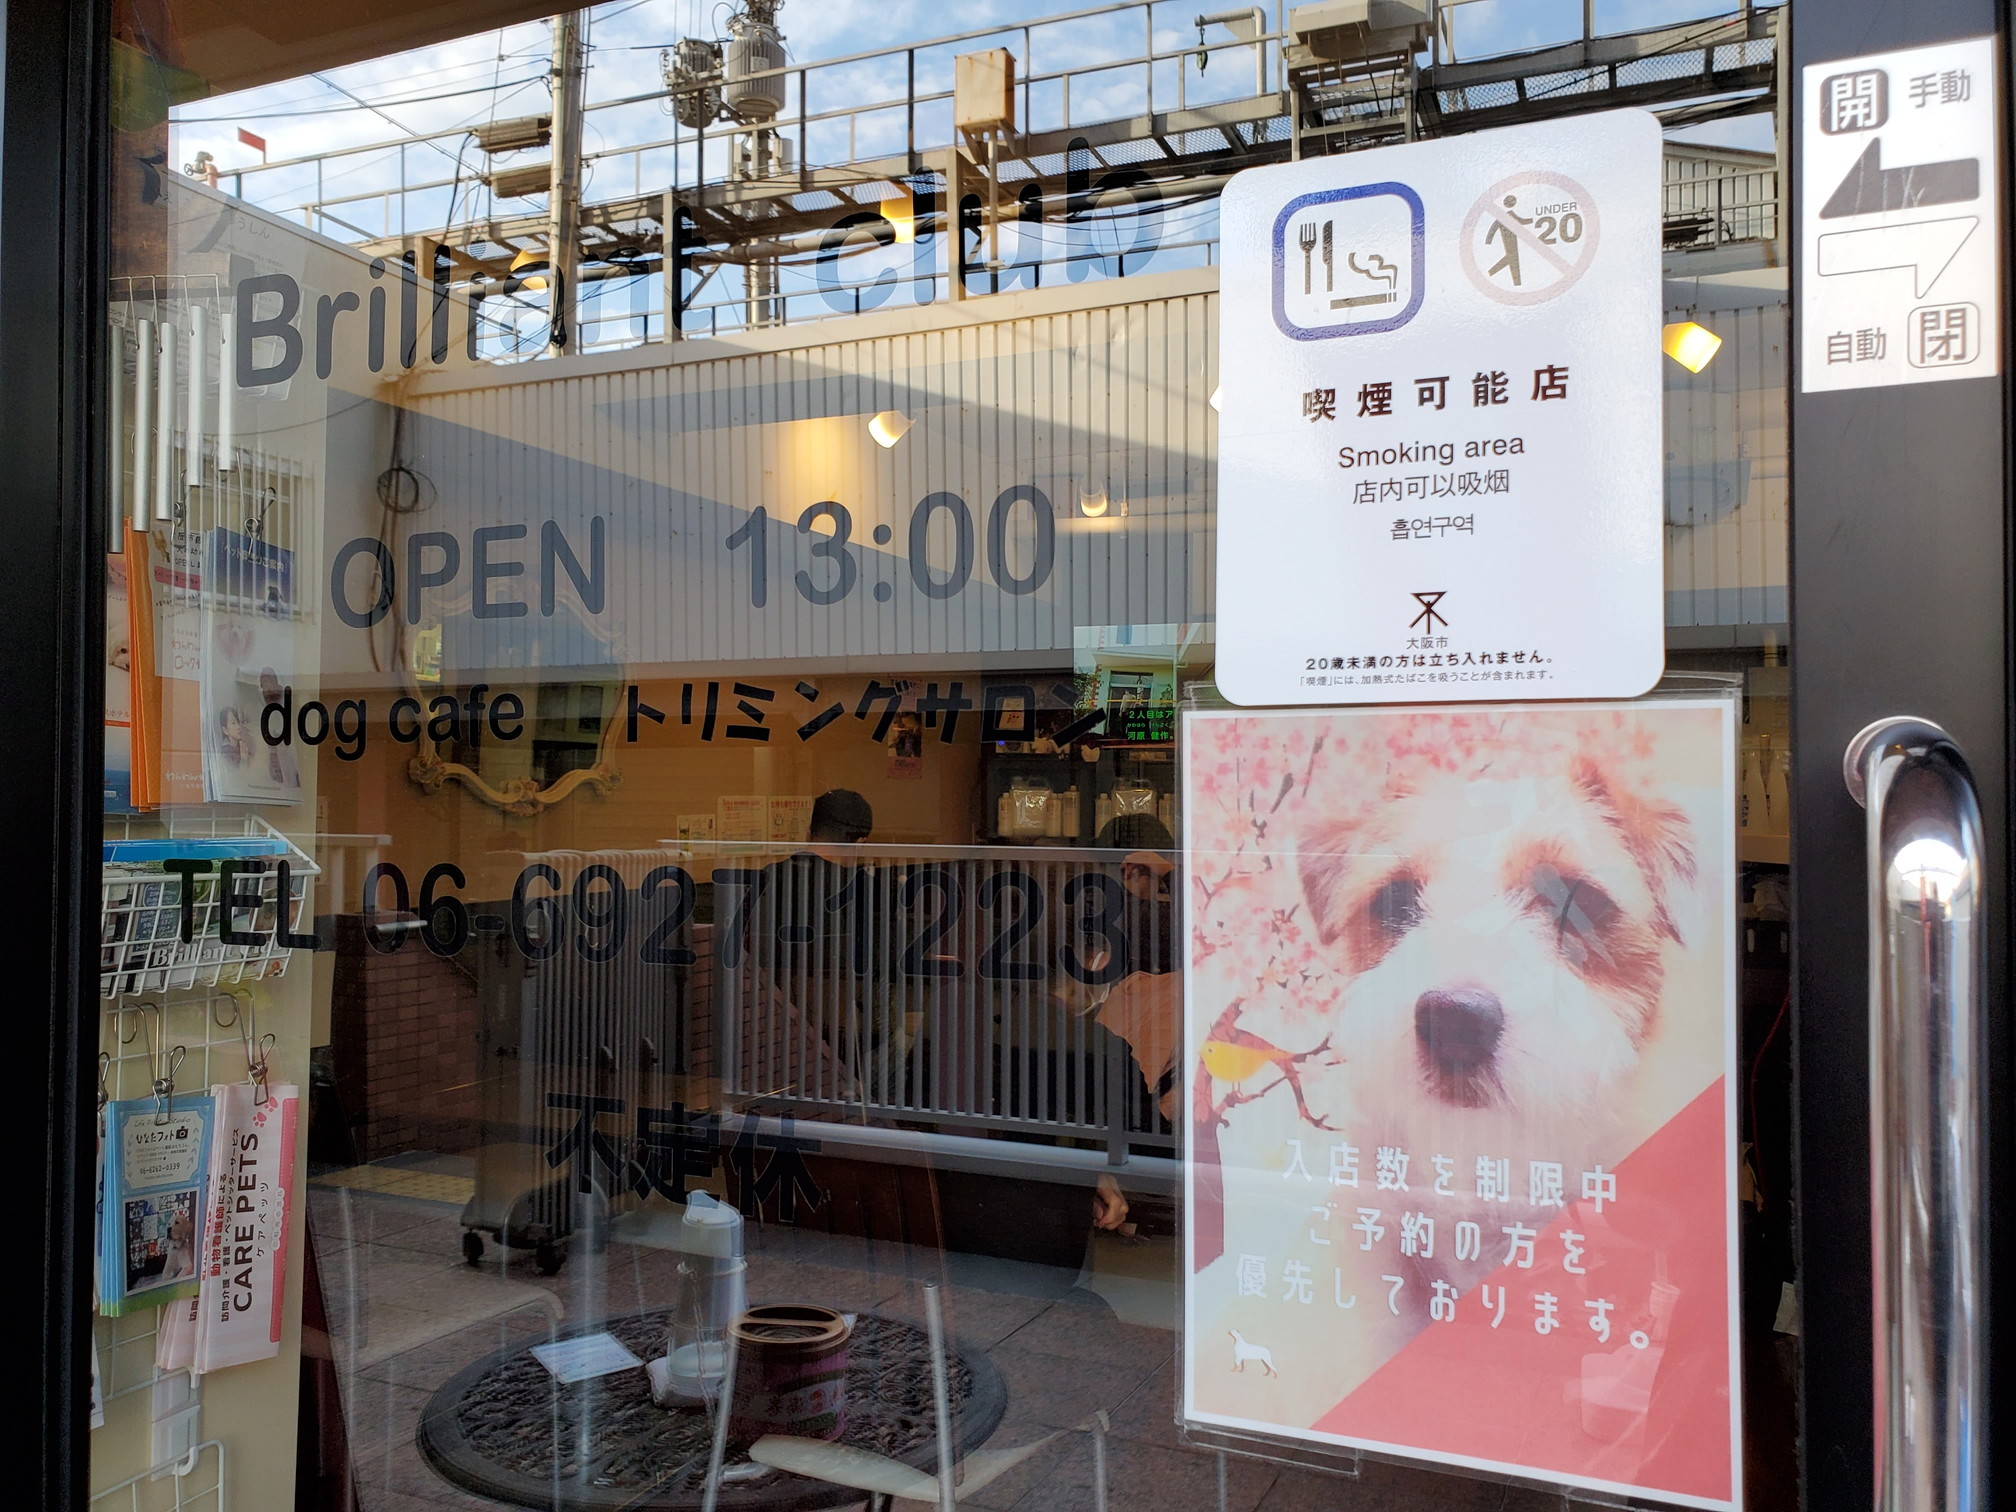 dog cafe Brilliant Club(ドッグカフェ ブリリアントクラブ)